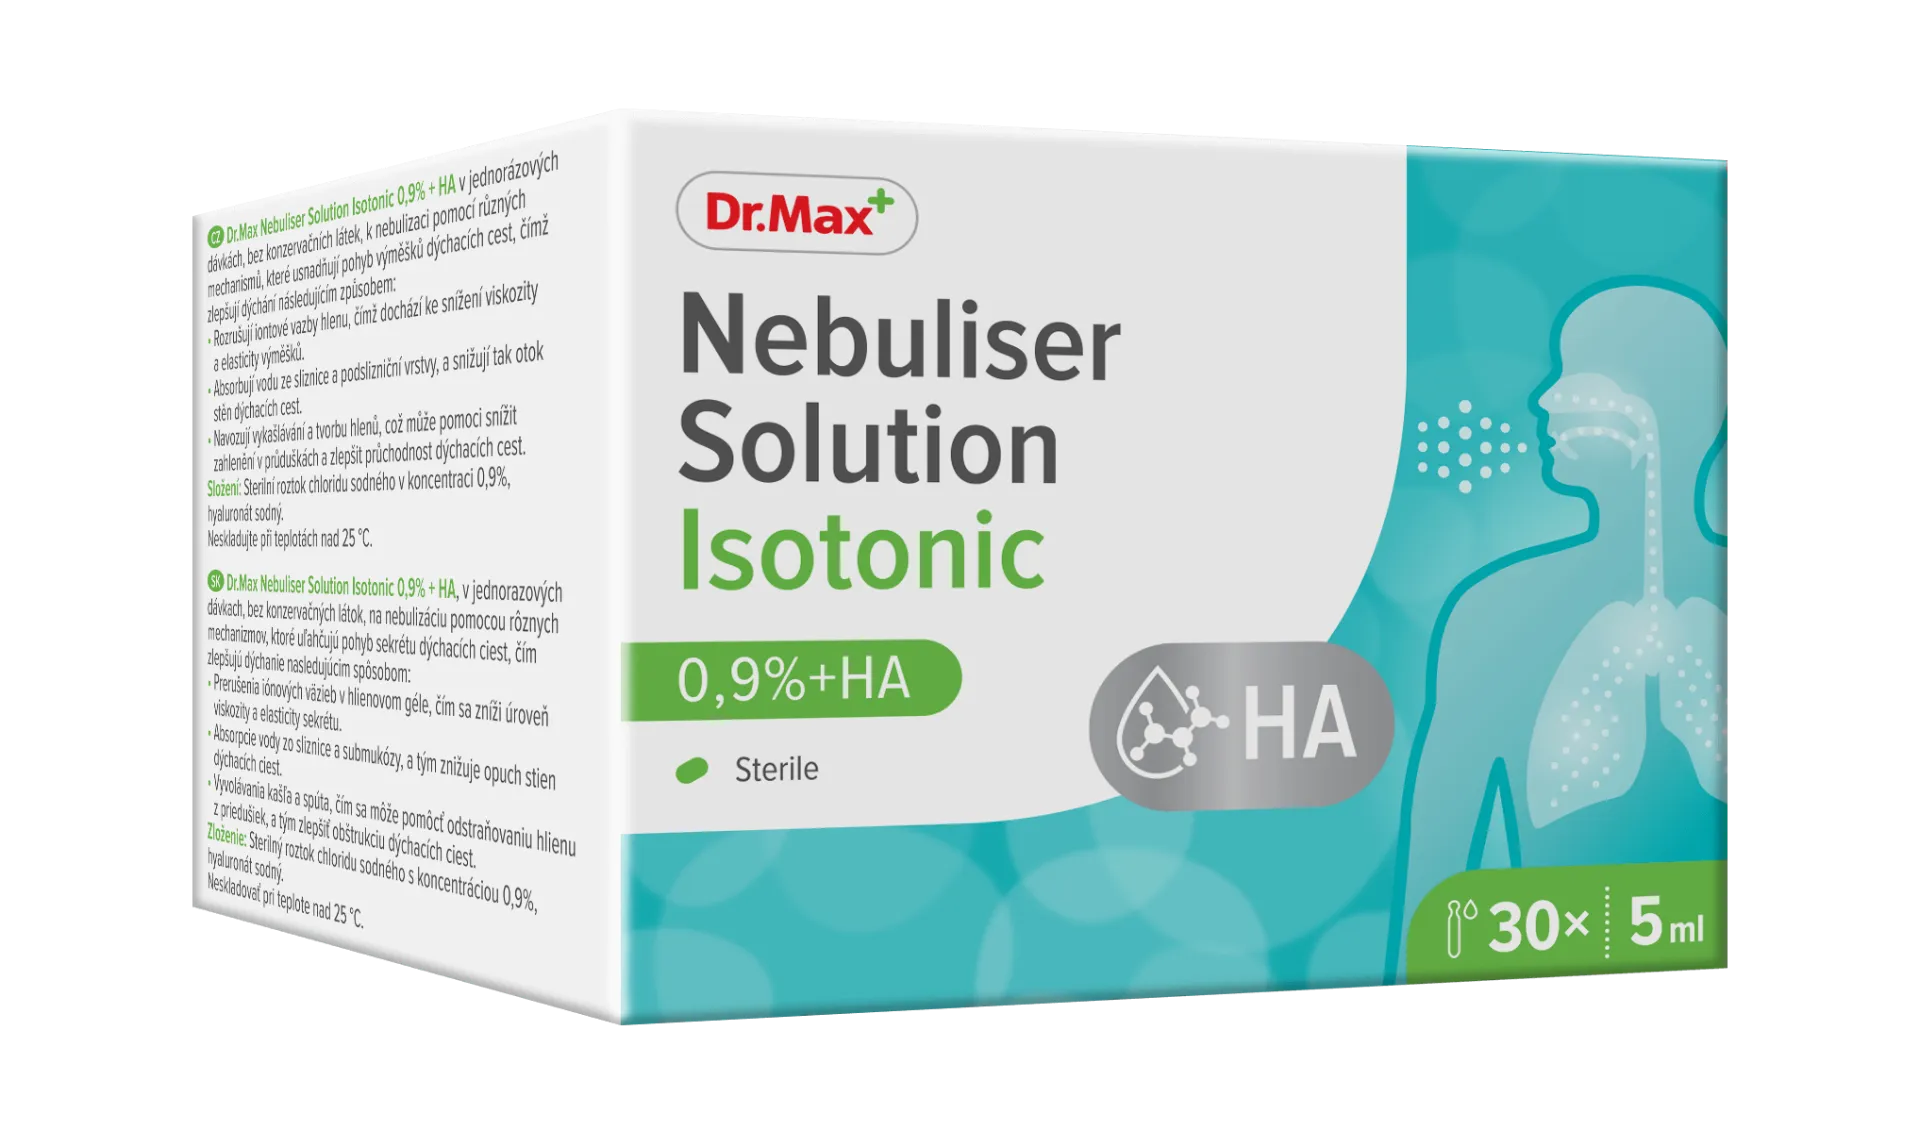 Nebuliser Solution Isotonic 0,9%+ HA Dr.Max, płyn do inhalacji, 5ml, 30 ampułek